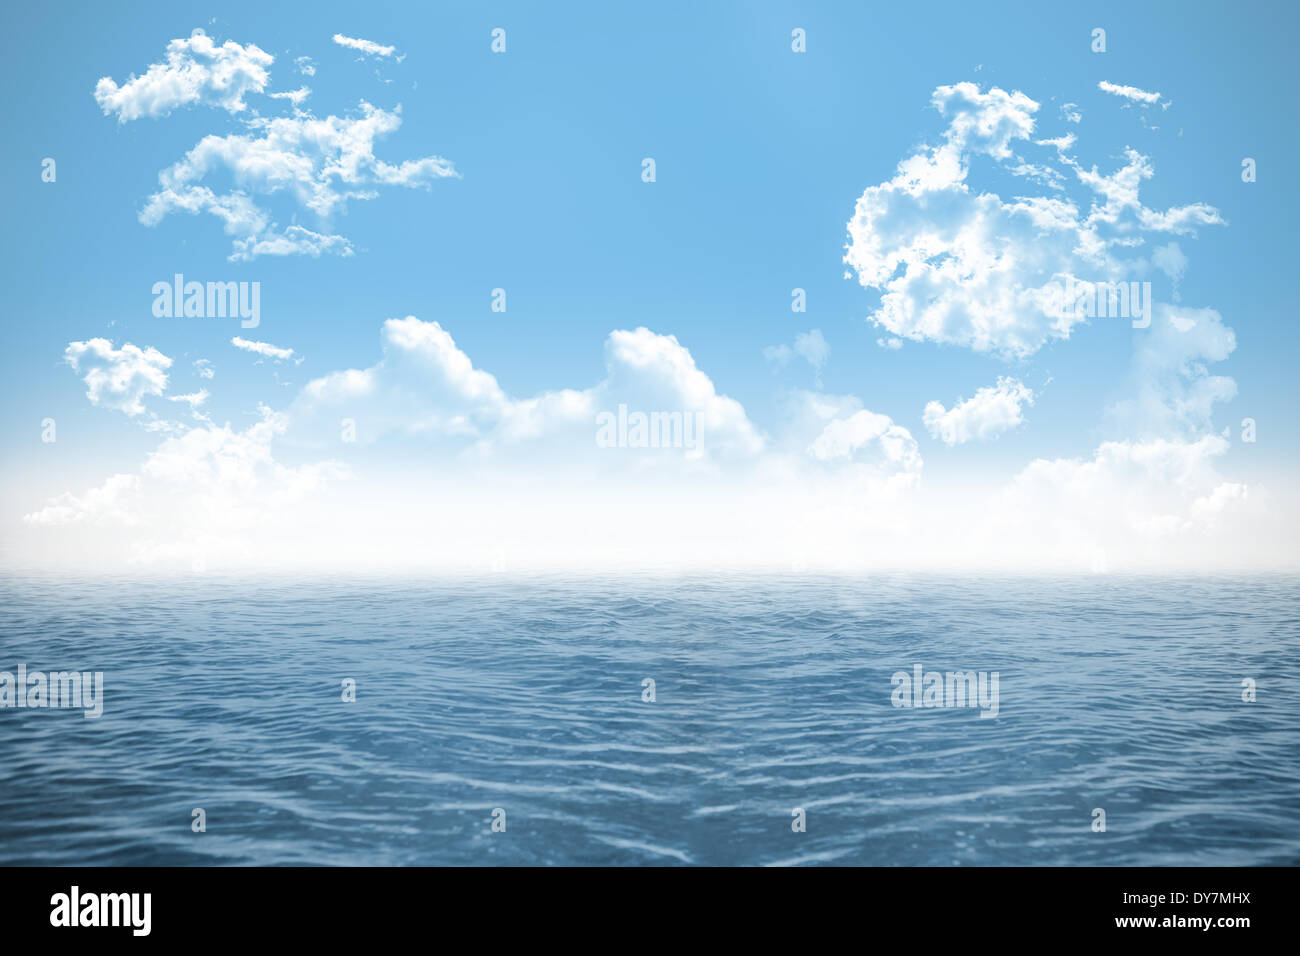 Open sea under cloudy blue sky Stock Photo